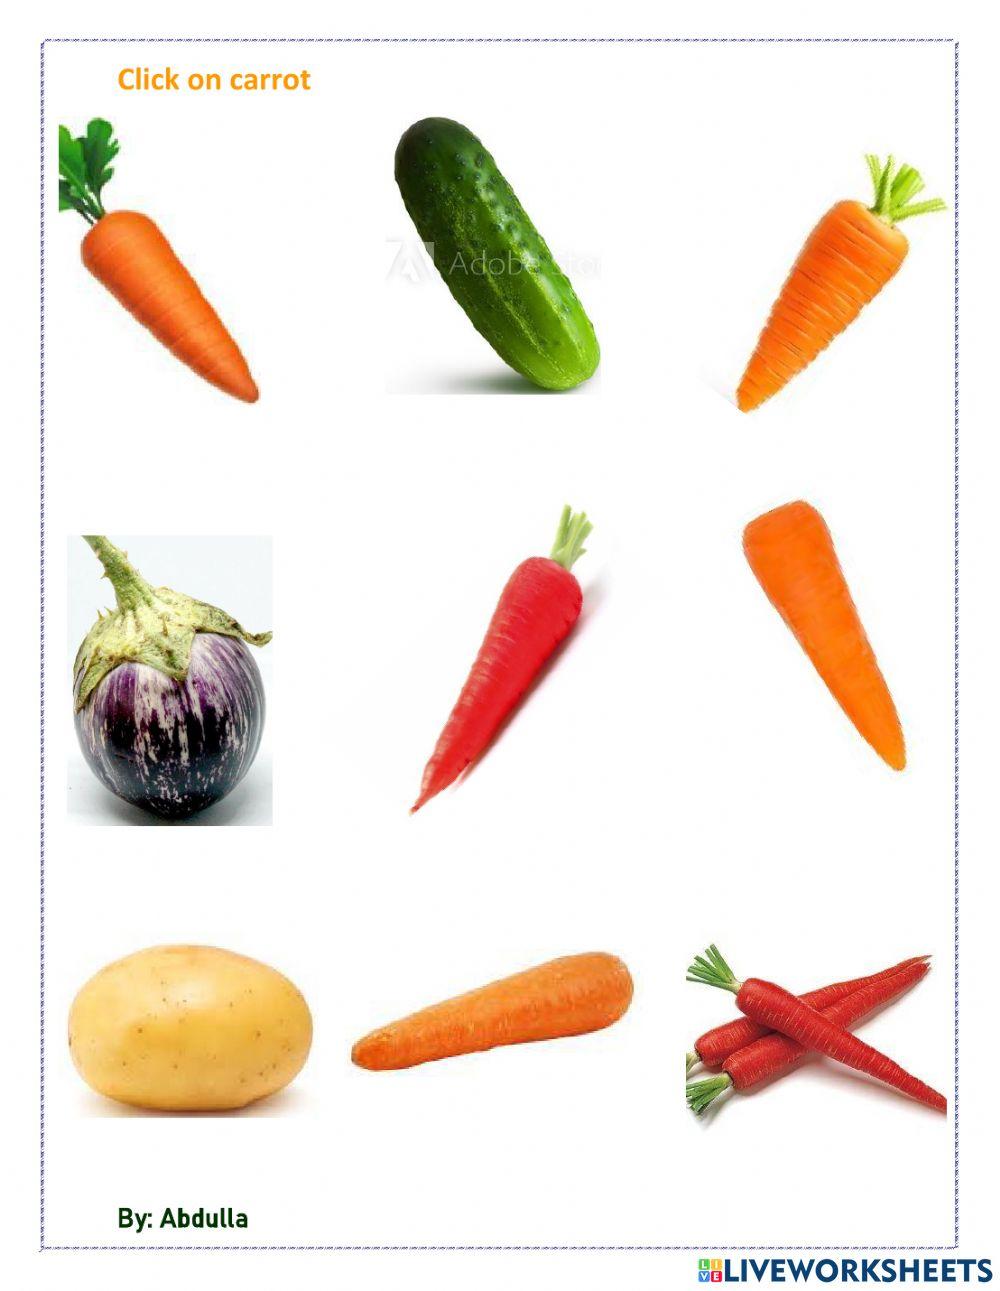 Identify carrot